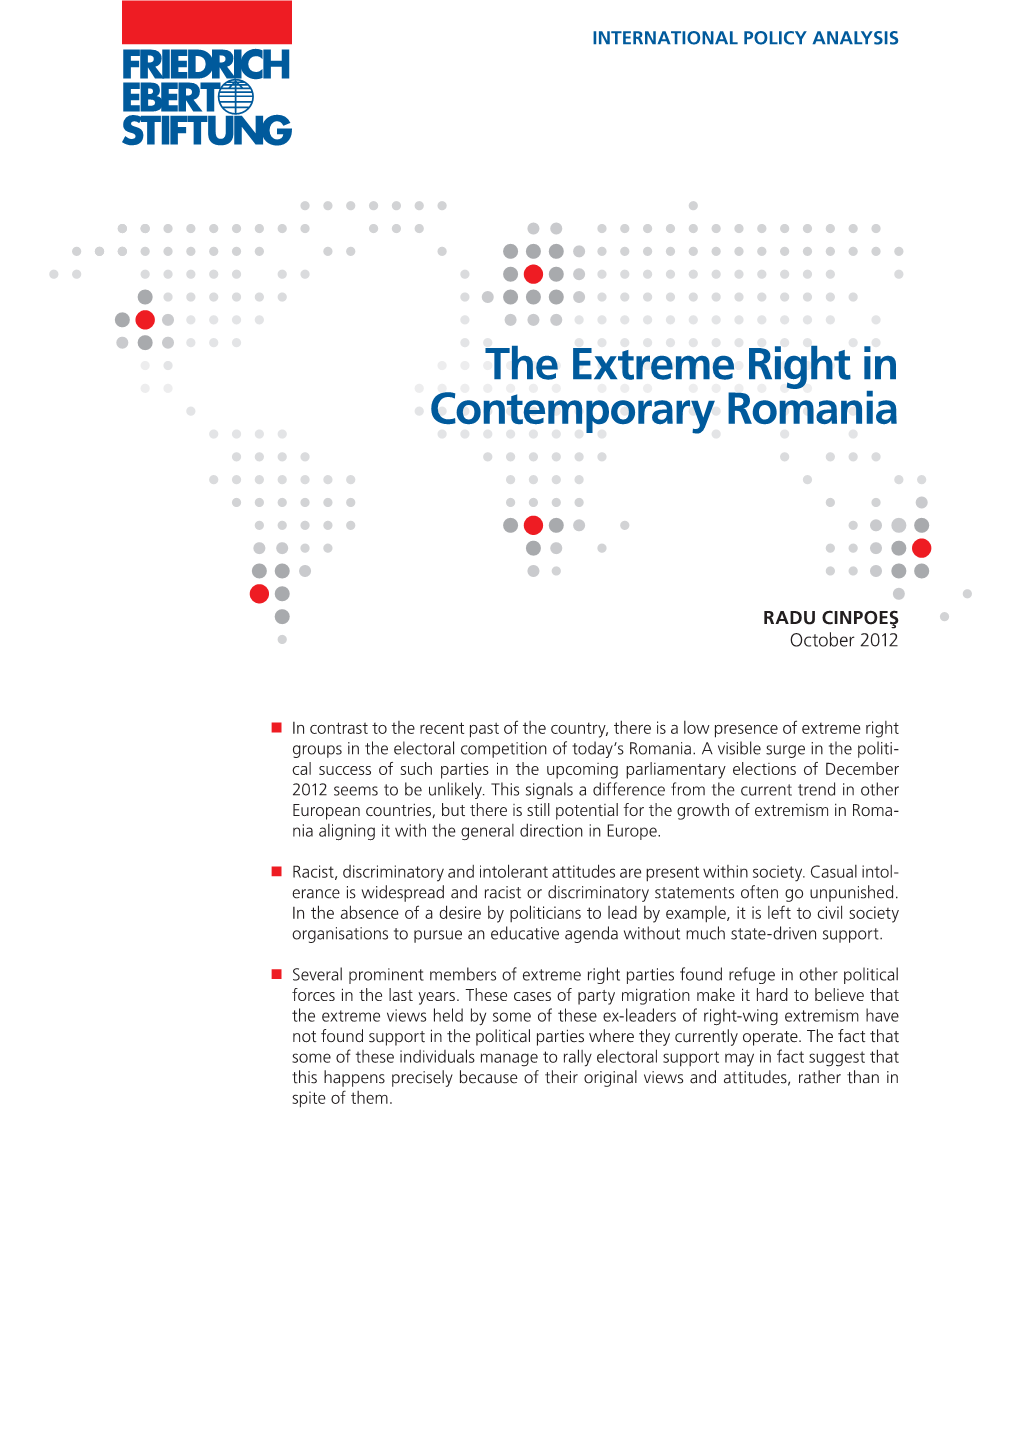 The Extreme Right in Contemporary Romania